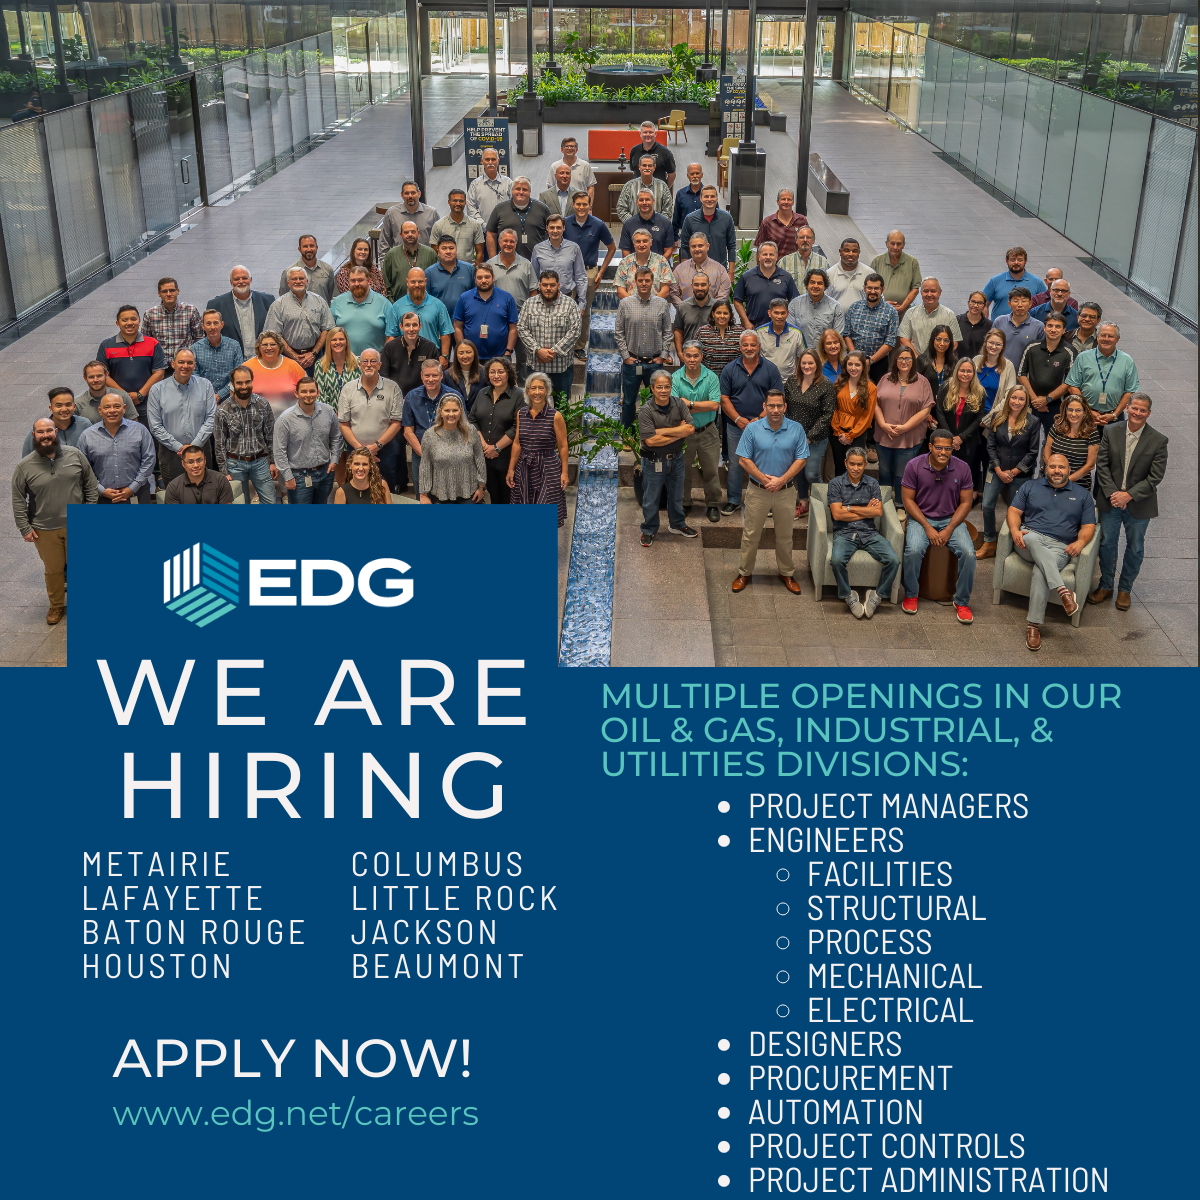 EDG employees promoting EDG is hiring